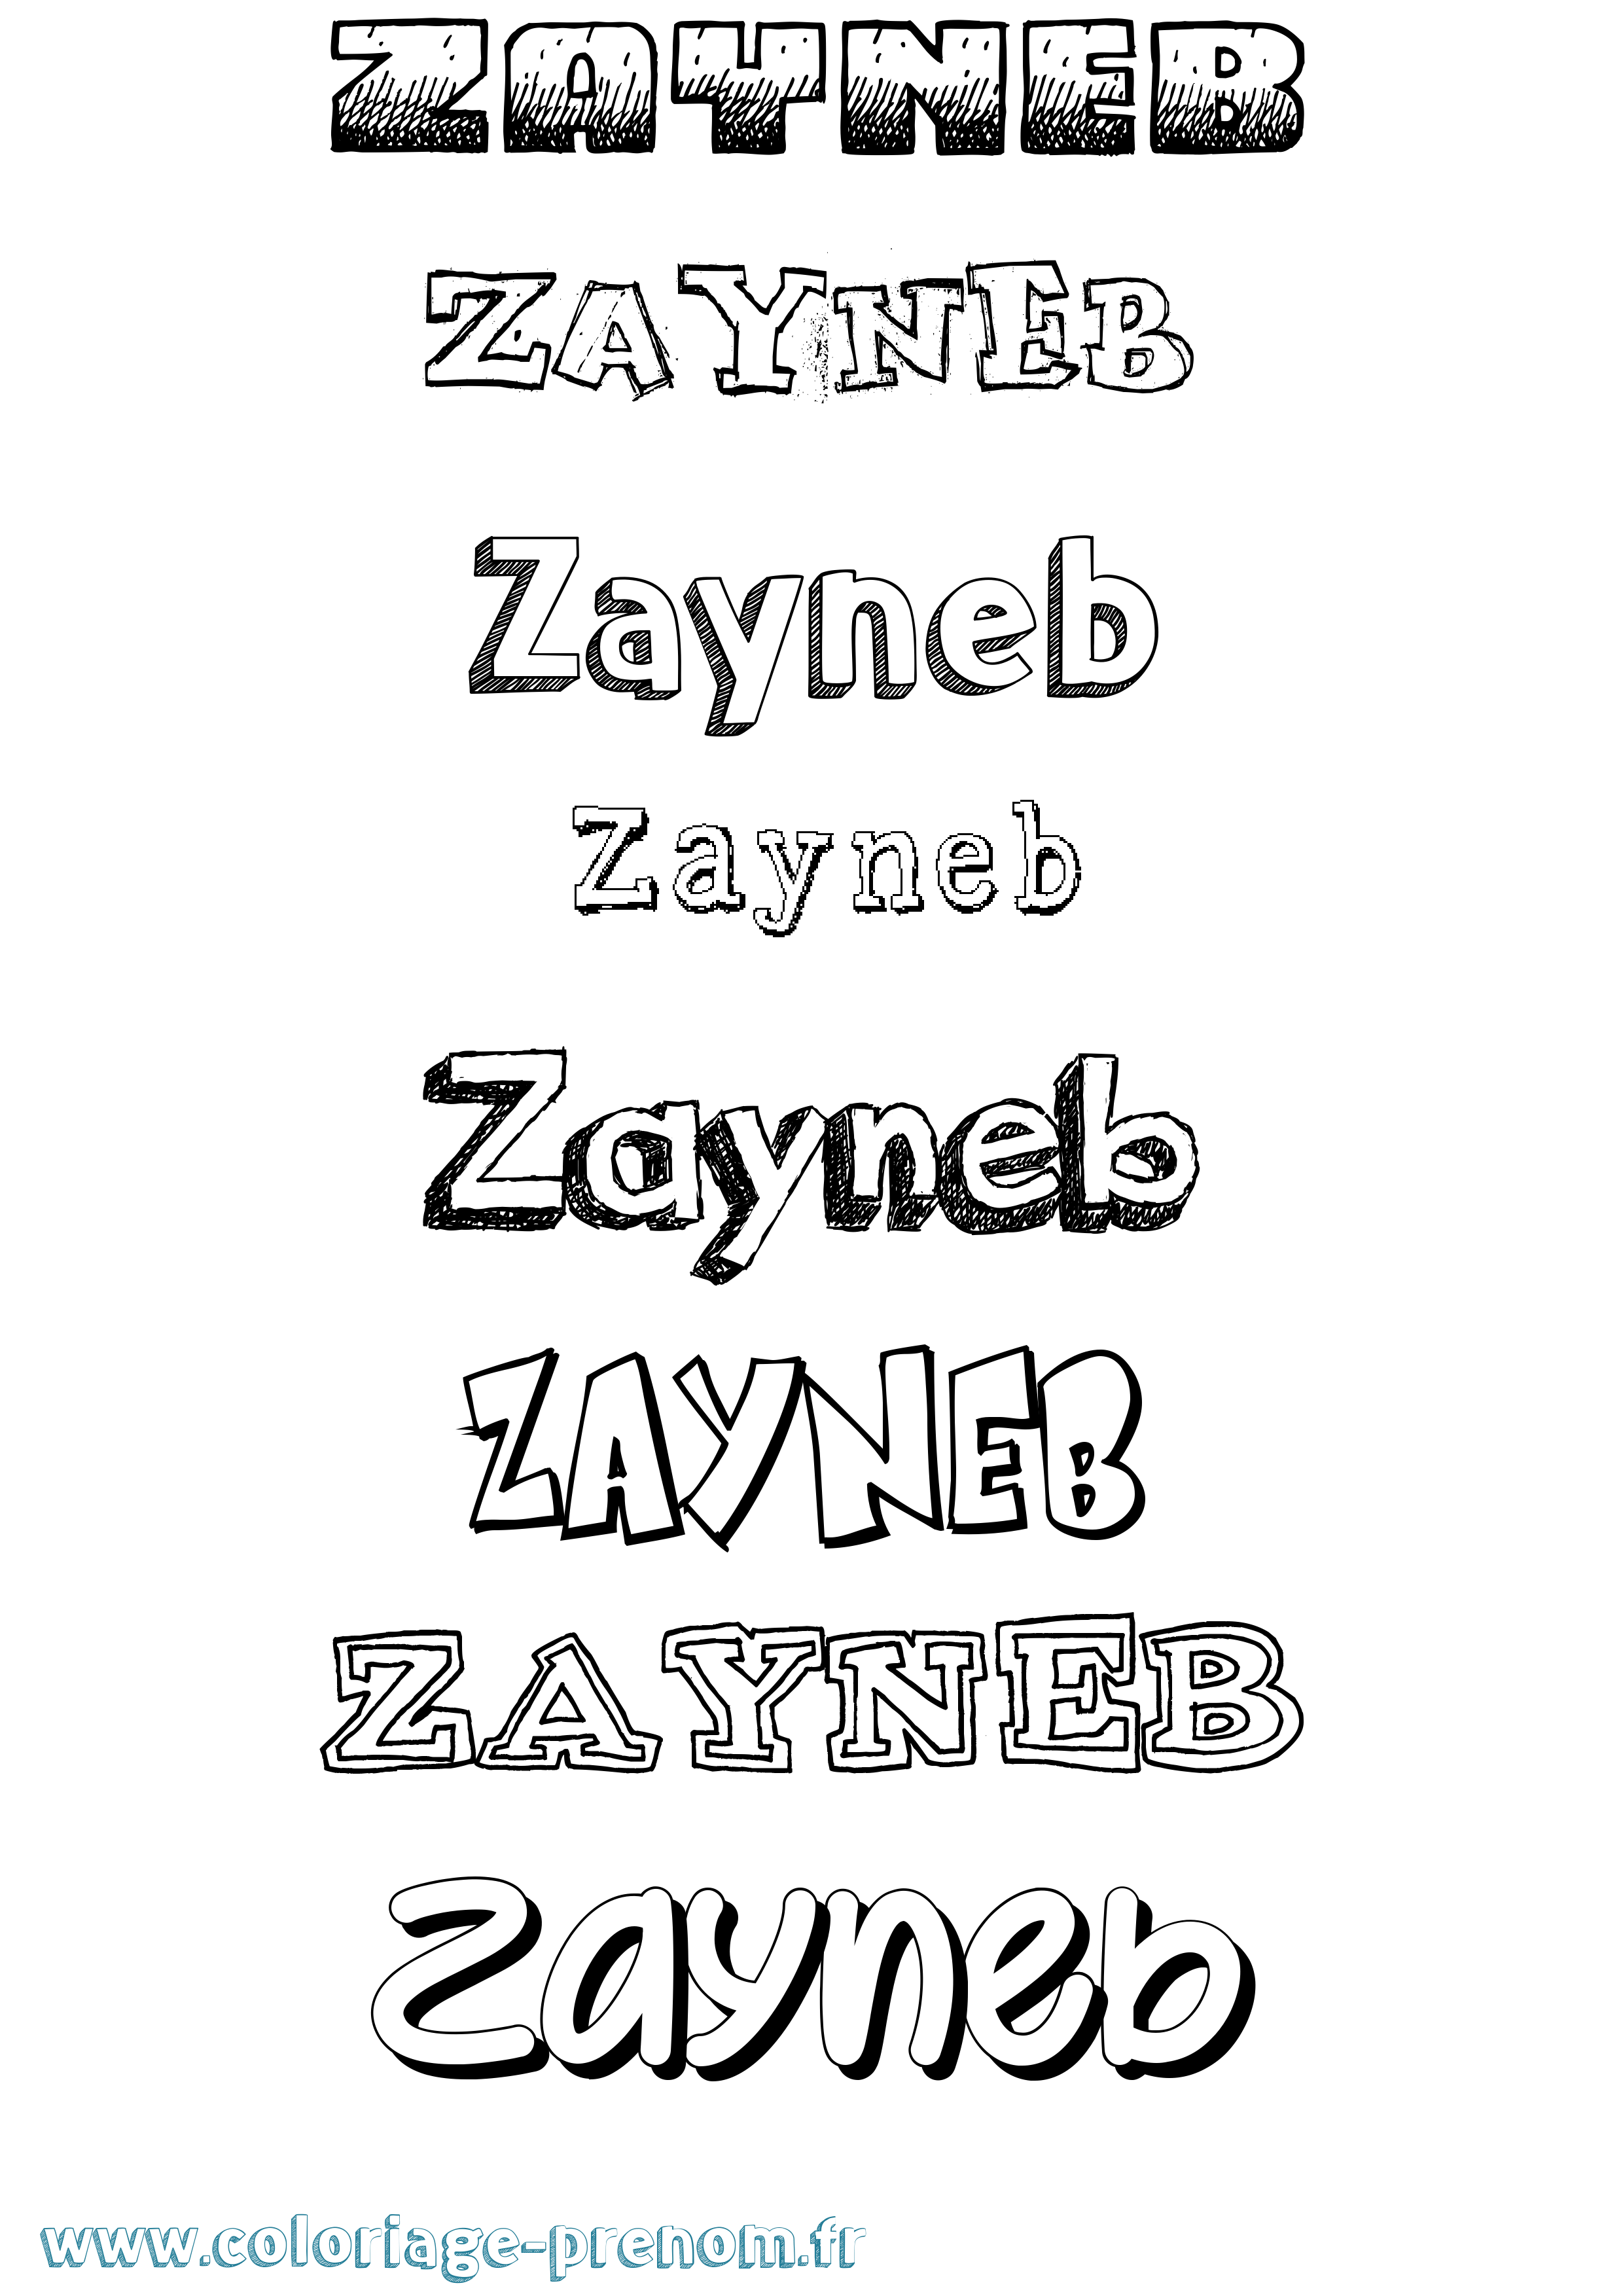 Coloriage prénom Zayneb Dessiné